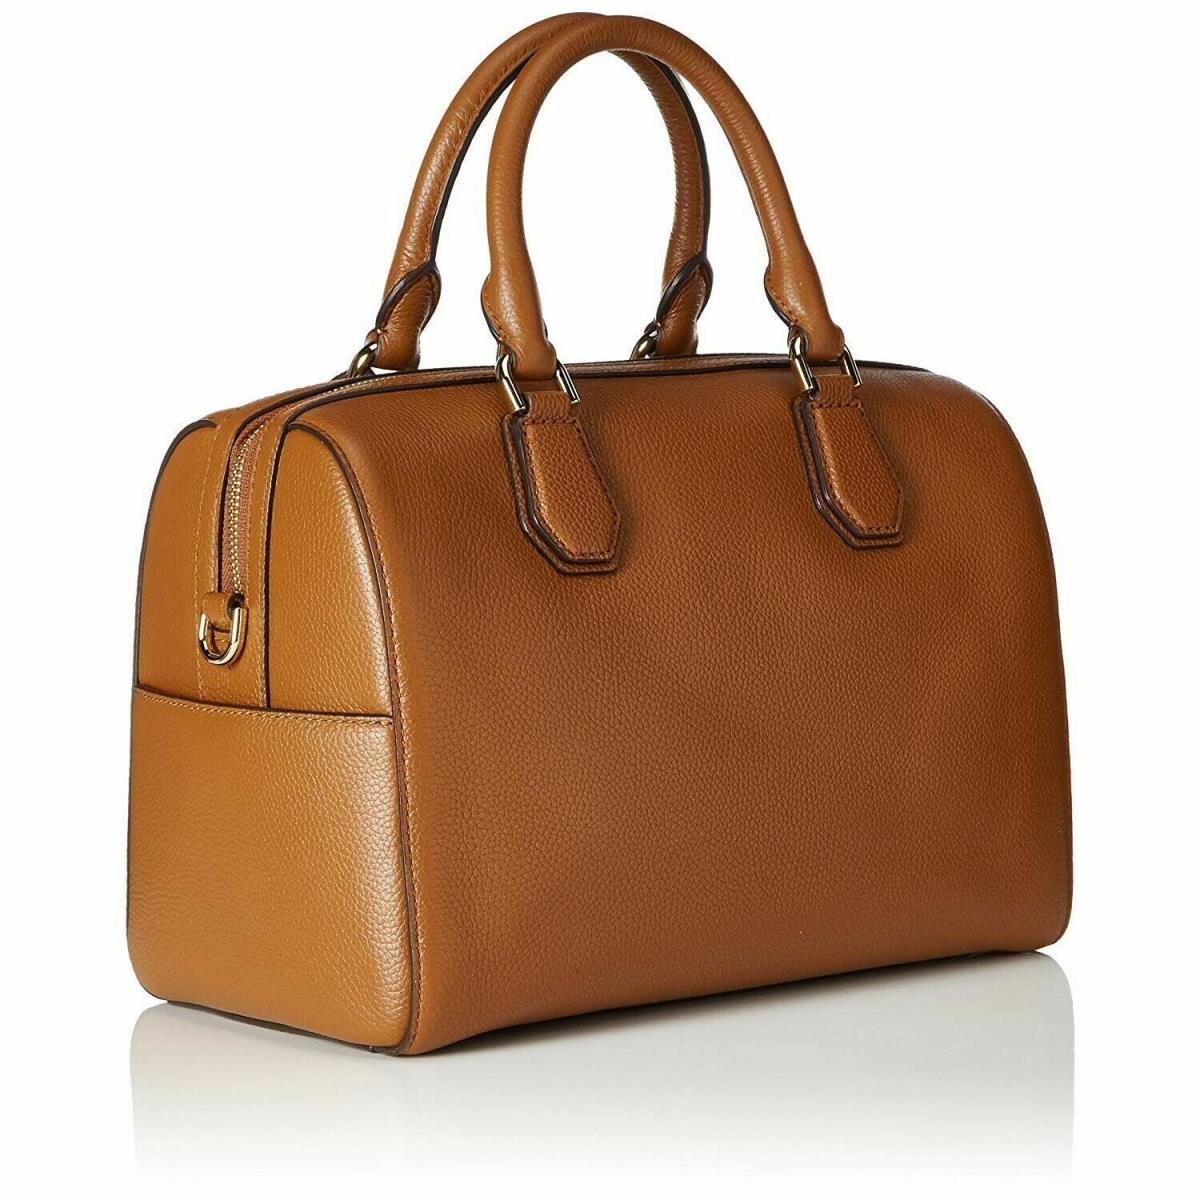 Kors Mercer Medium Luggage/ Brown Leather Duffle Bag